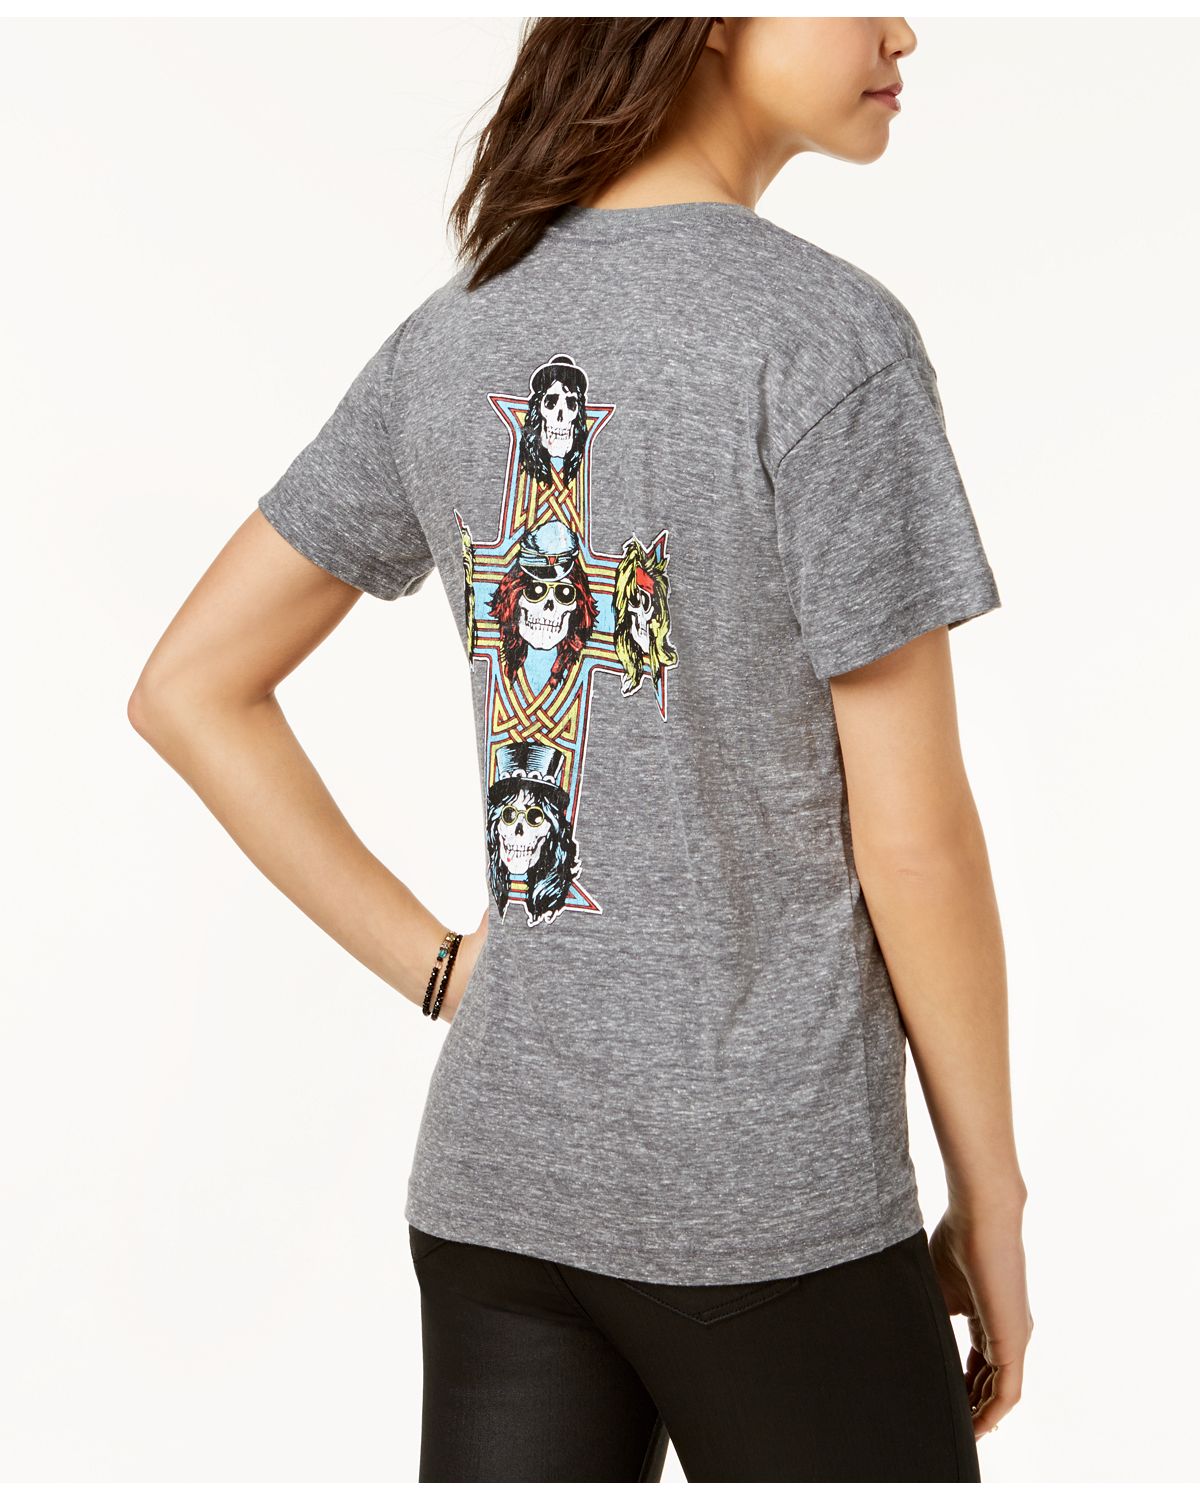 Bravado Juniors Guns And Roses Graphic T-Shirt